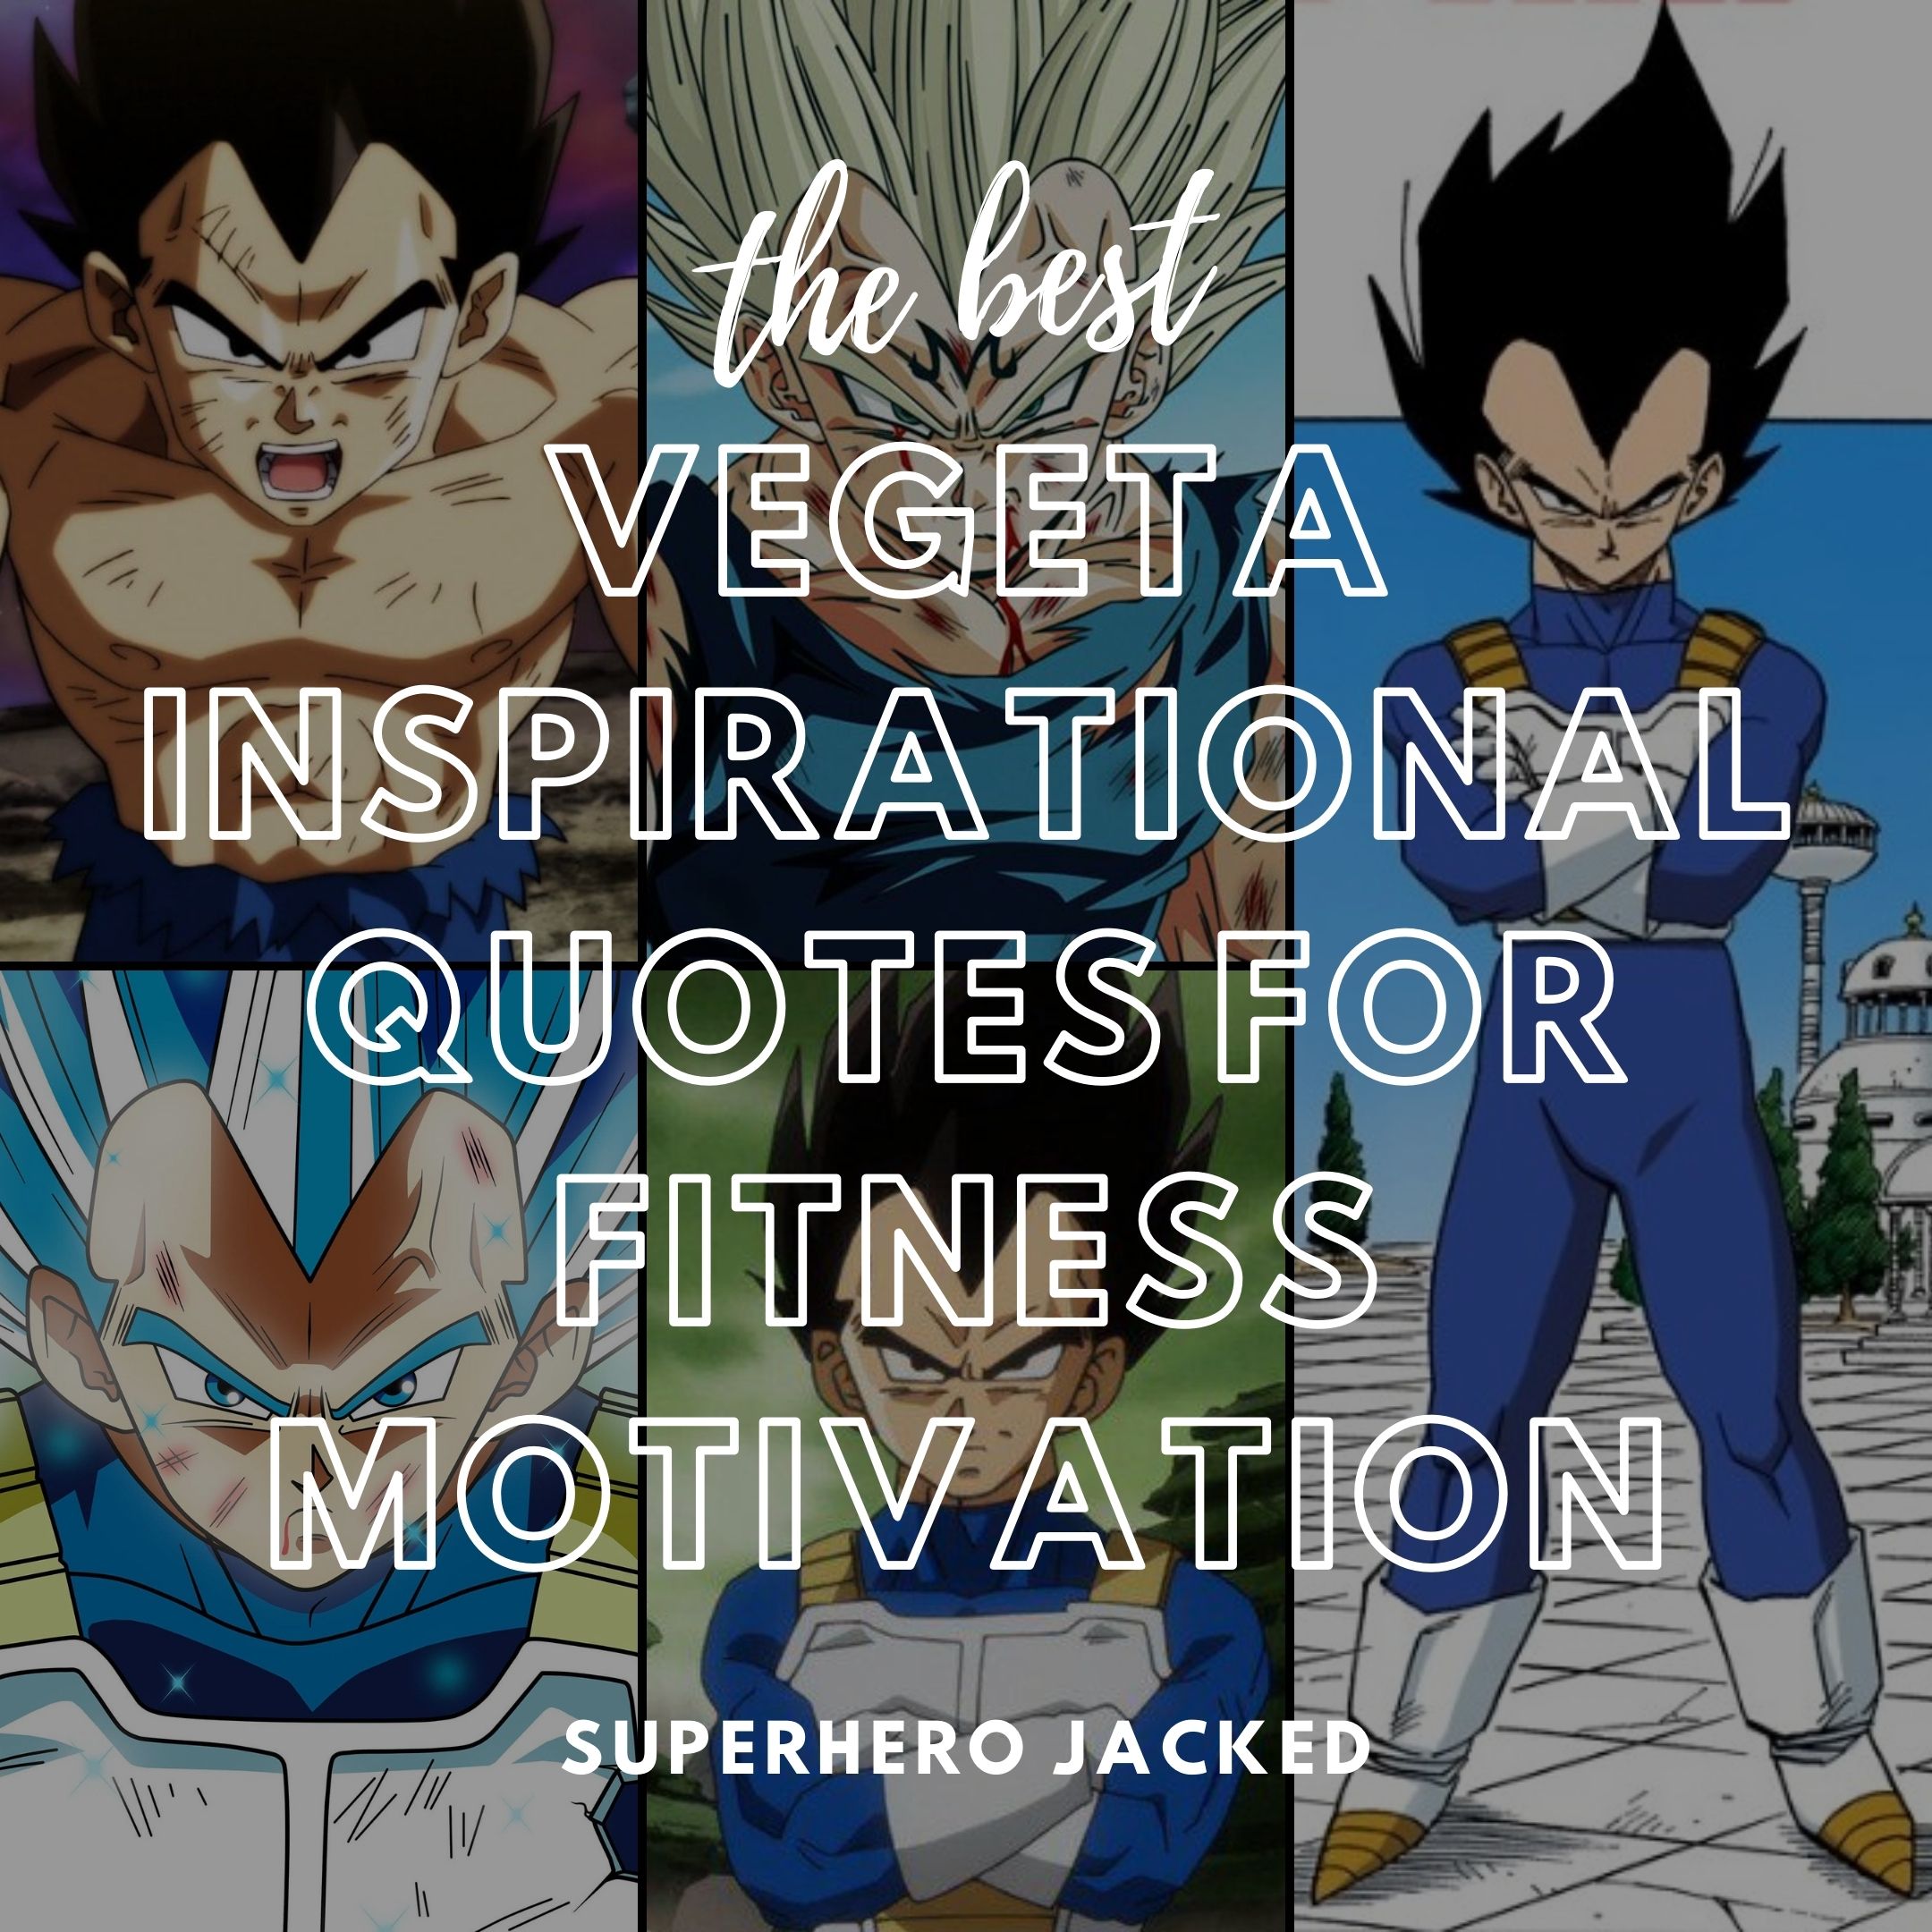 Vegeta Quotes: Top Vegeta Quotes for Fitness Motivation!